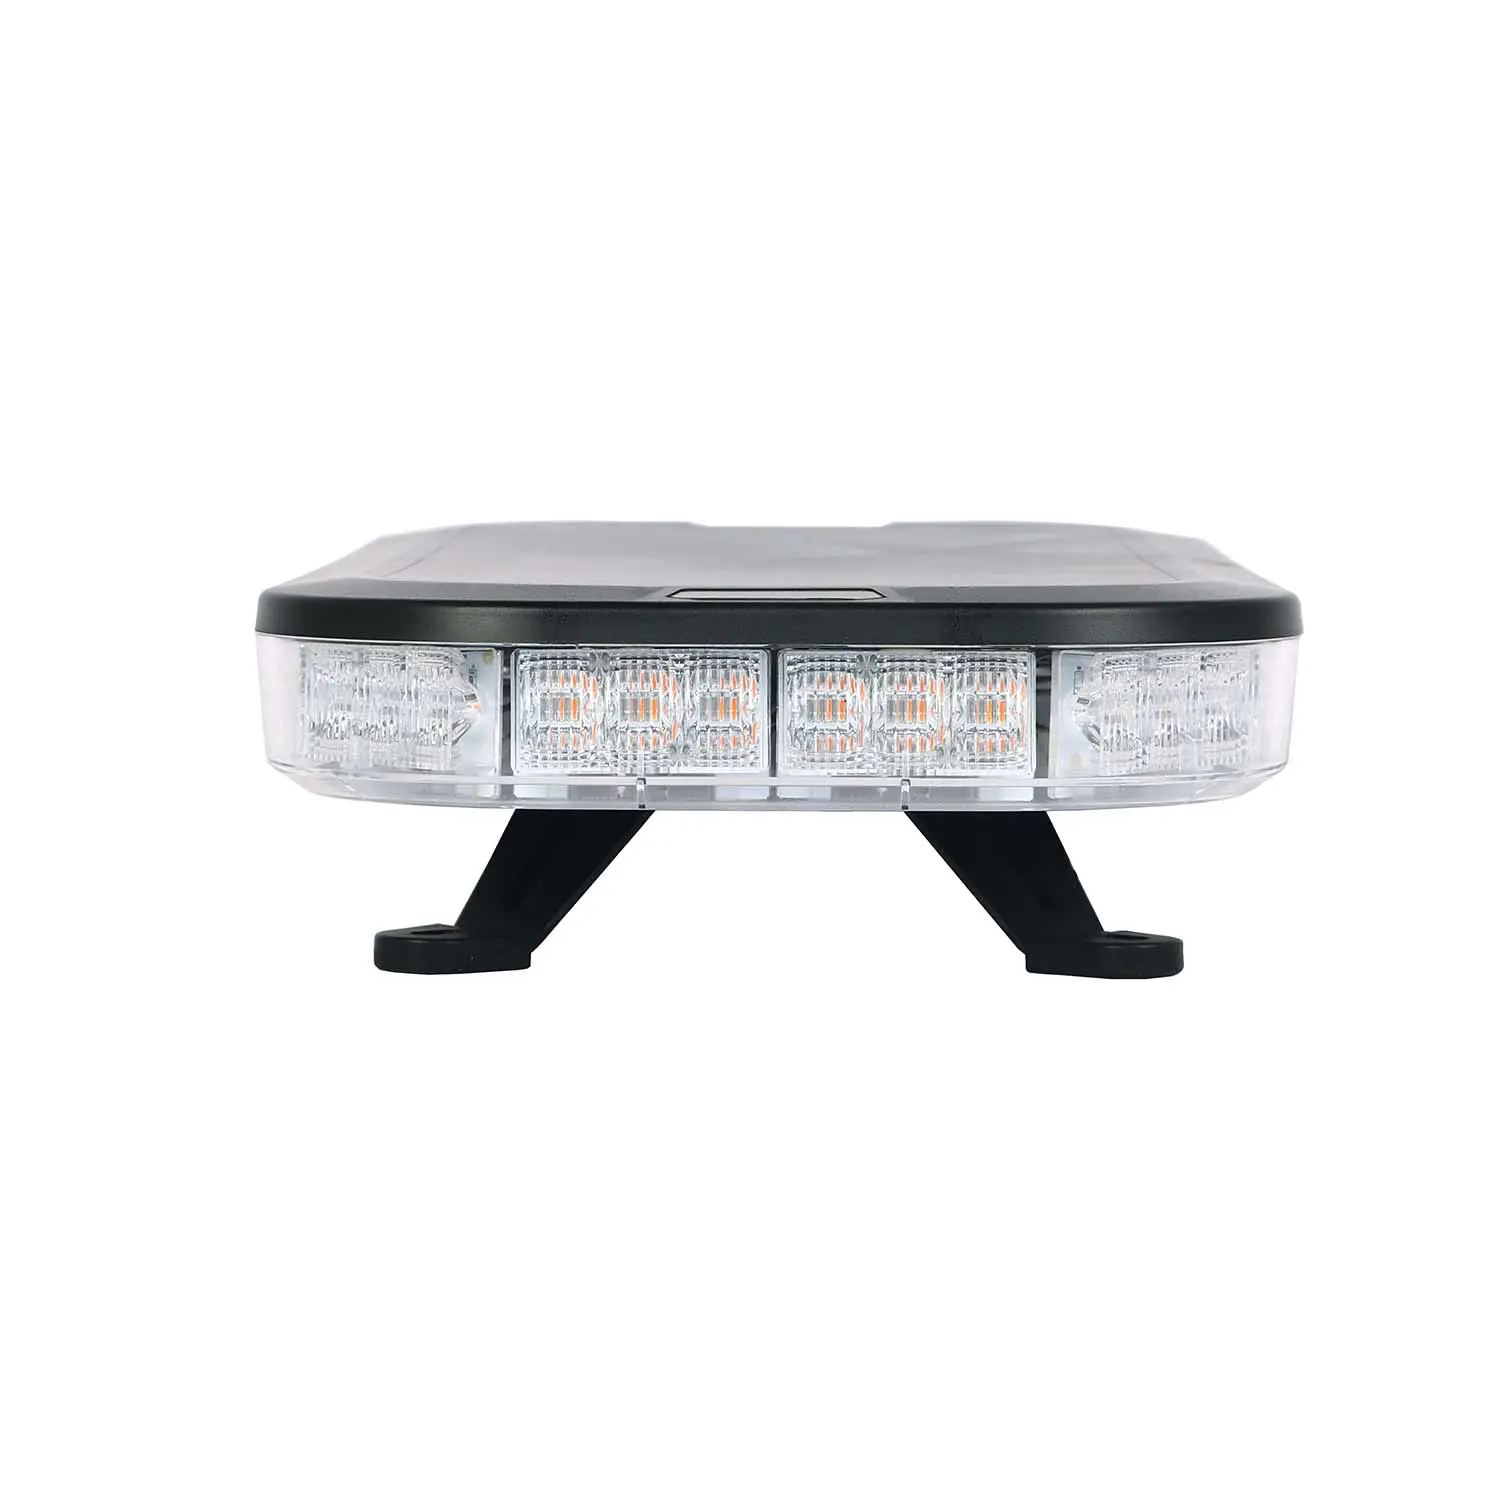 LED Roof Top Strobe Lights Emergency Hazard Warning Light Safety Flashing LED Mini Bar for Truck Car Snow Plow Vehicle